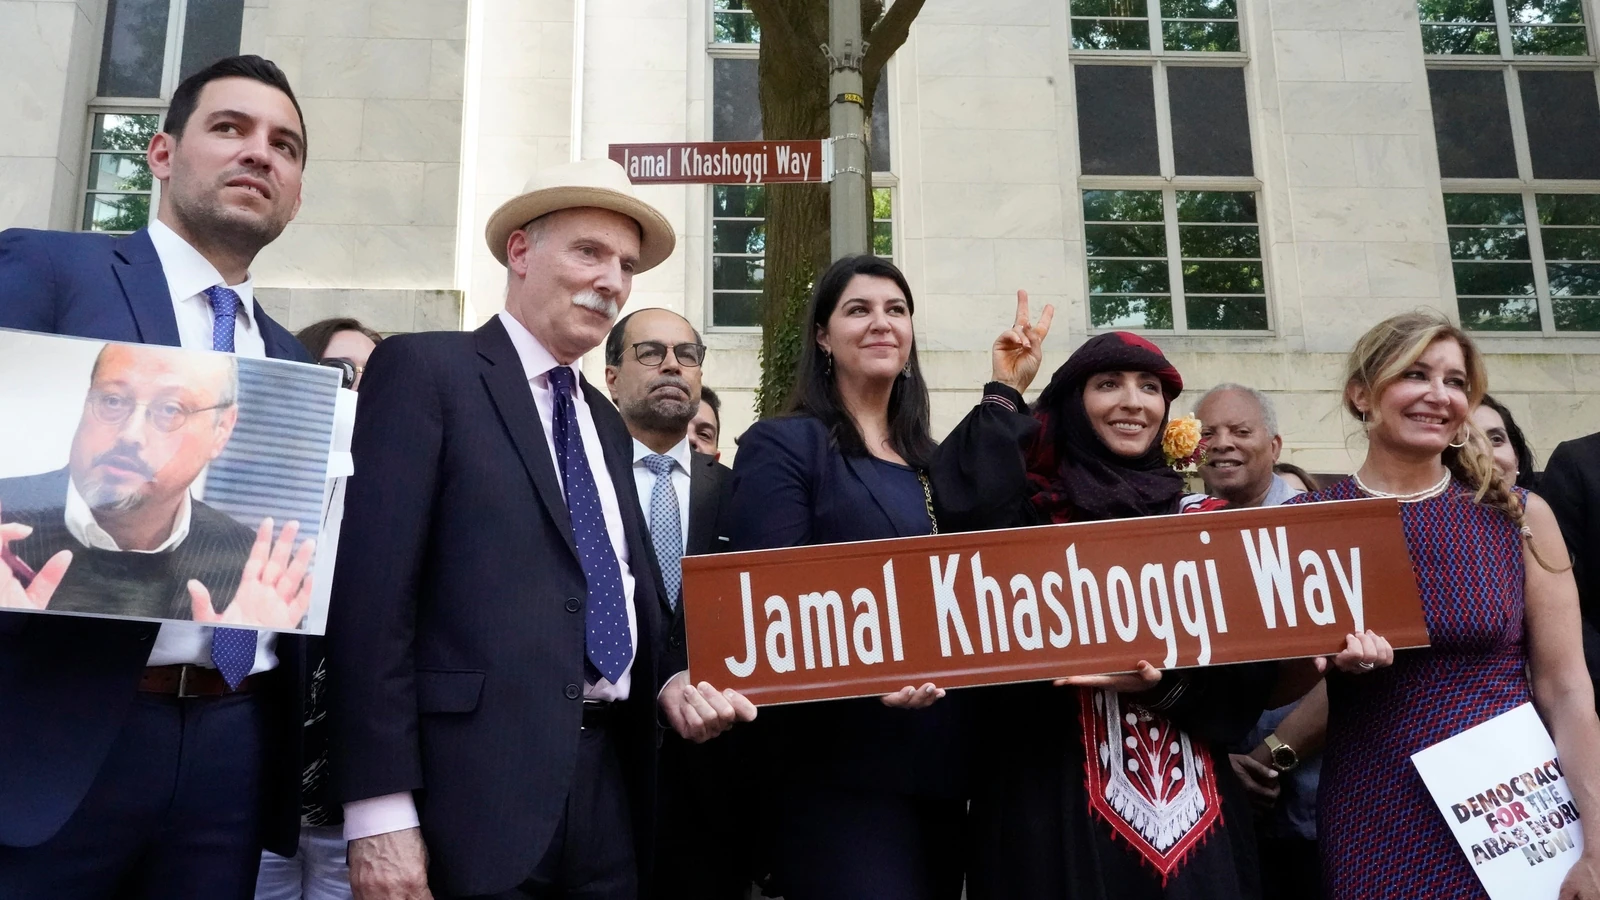 DC trolls Saudi embassy by naming street Jamal Khashoggi Way